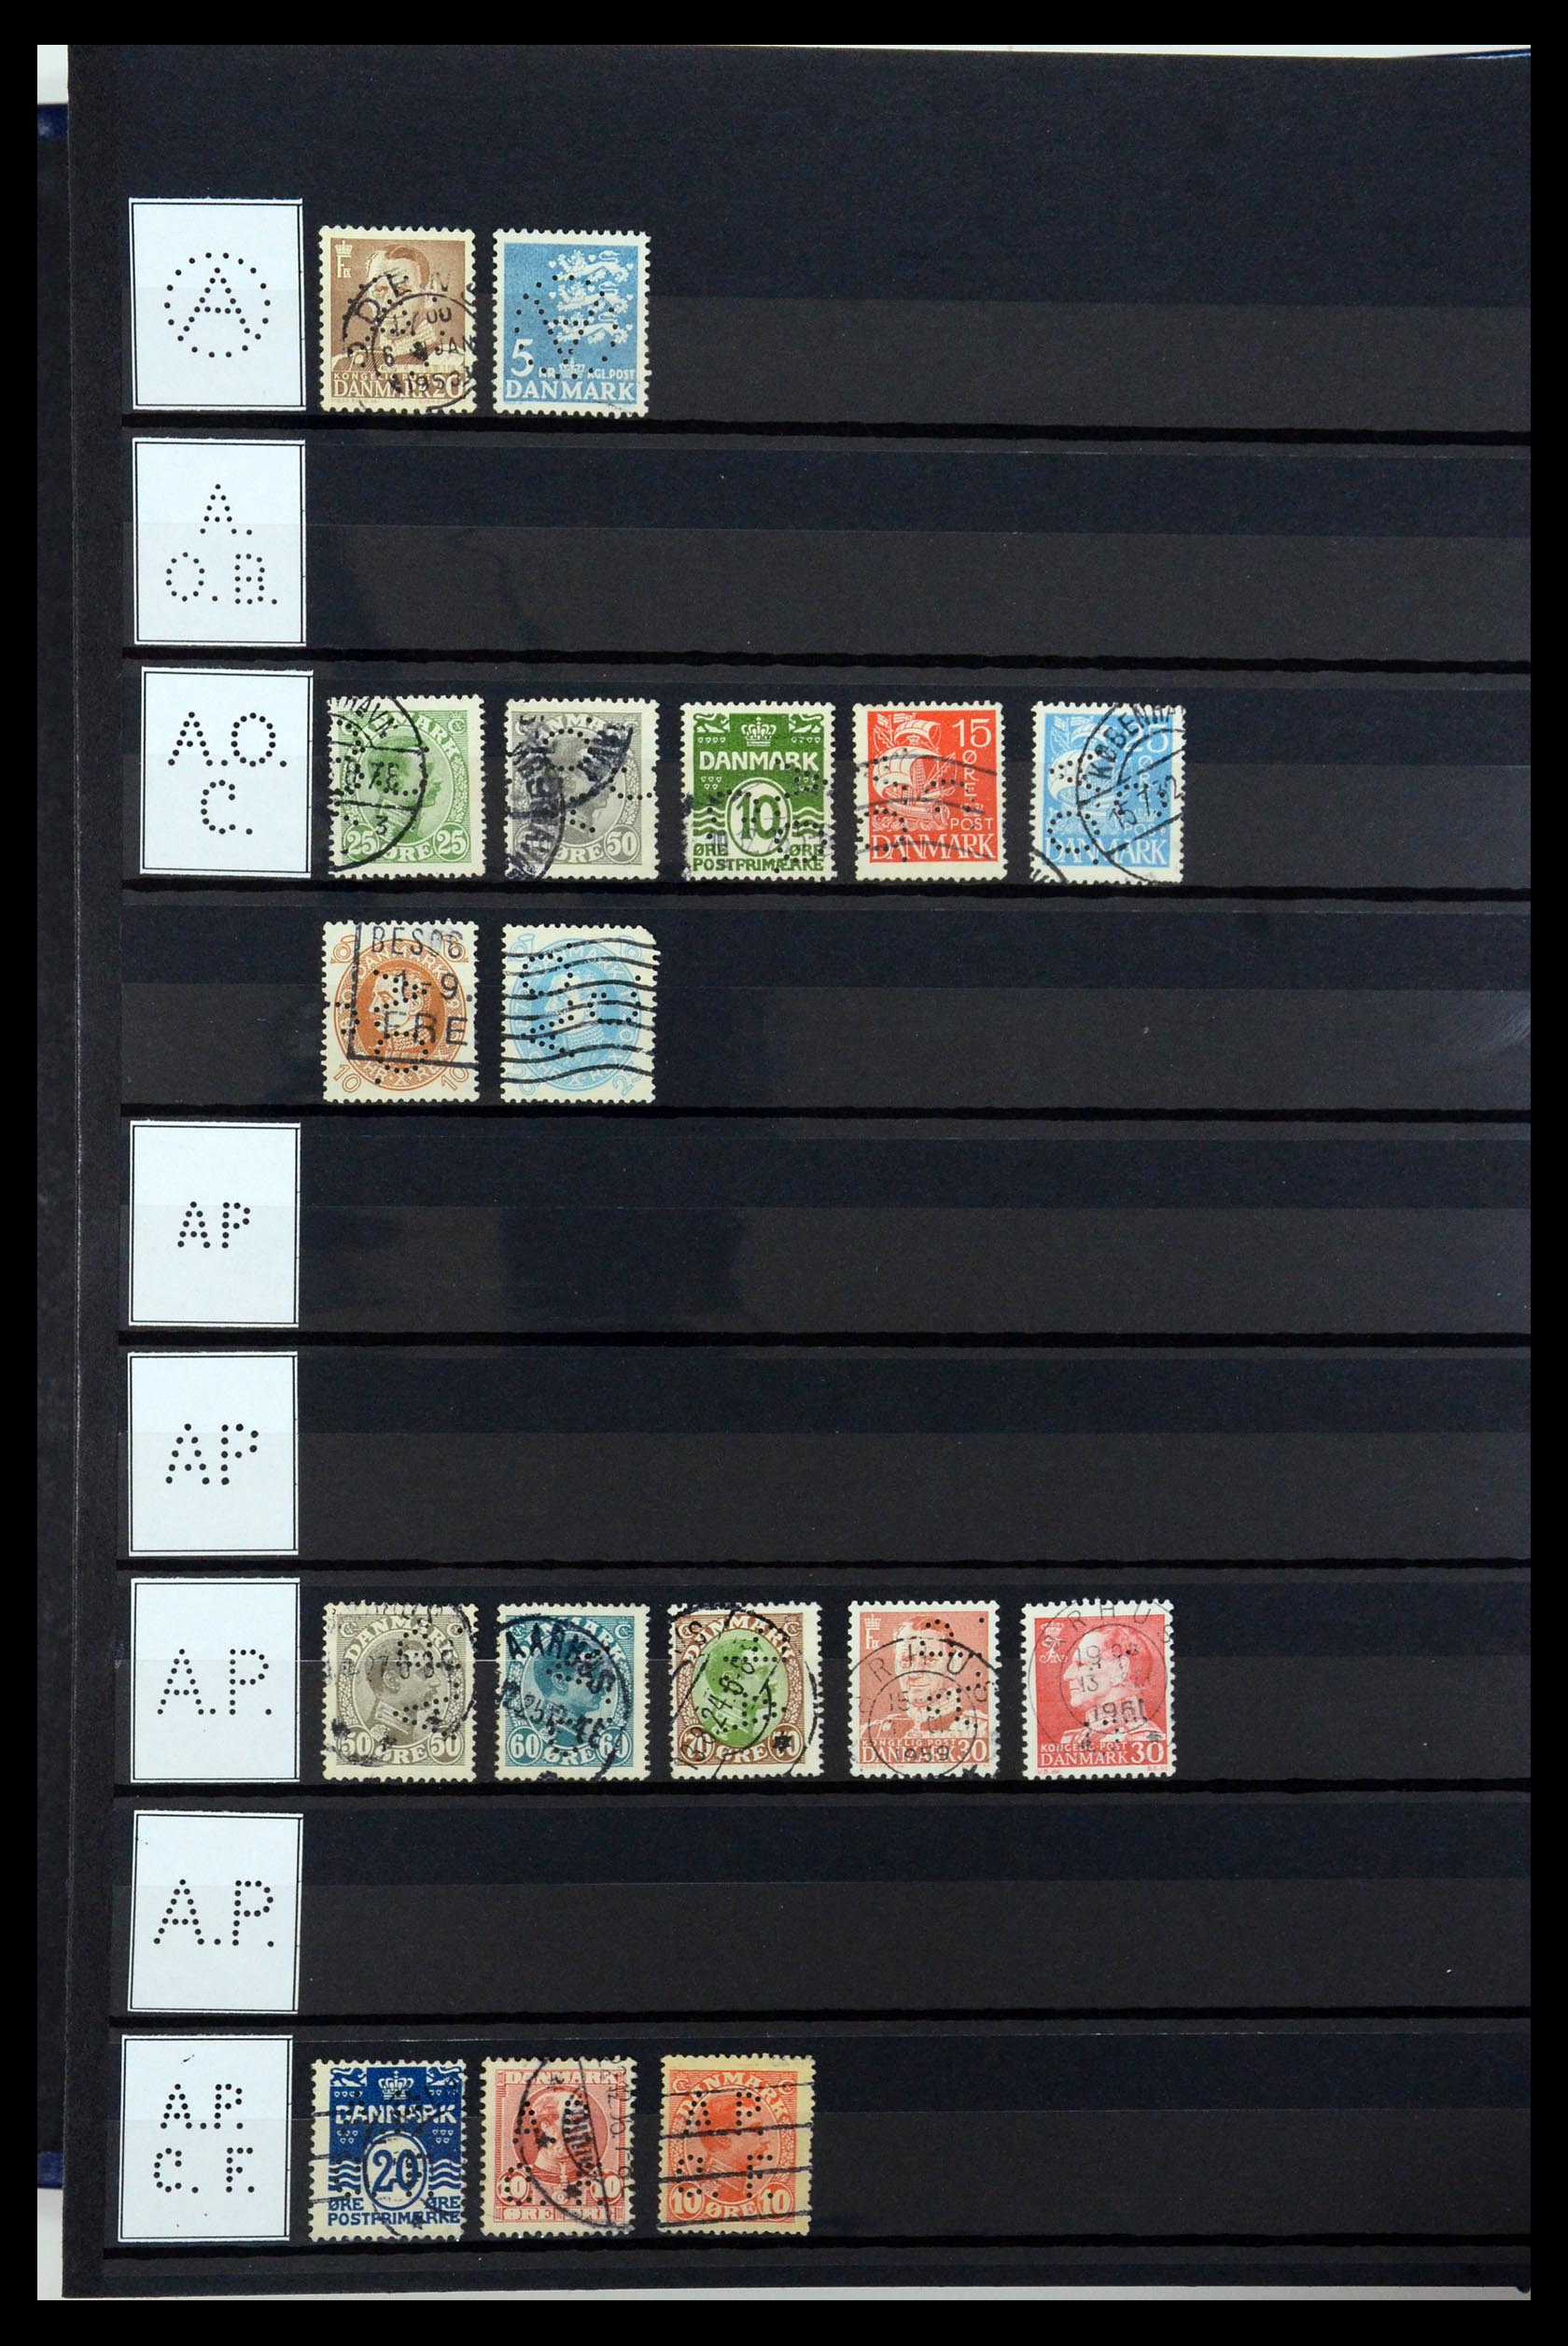 36396 008 - Stamp collection 36396 Denmark perfins.